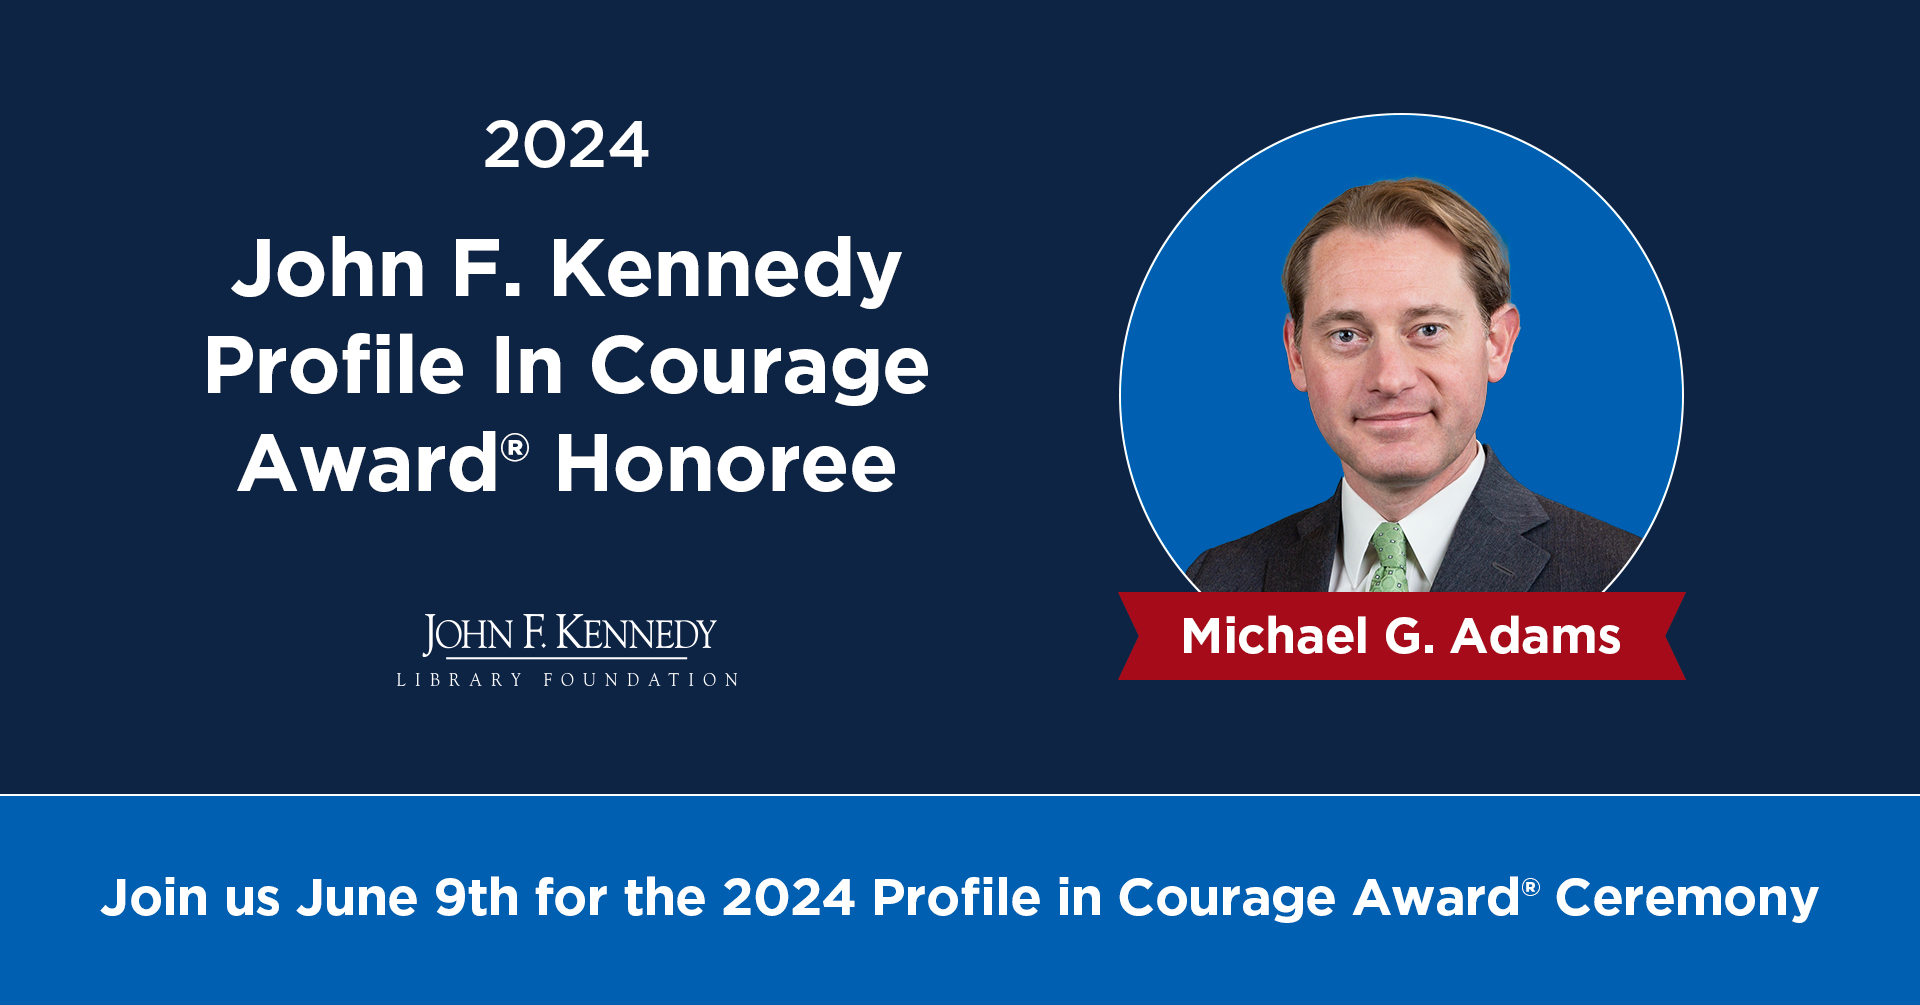 2024 Profile in Courage Award Honoree: Michael G. Adams